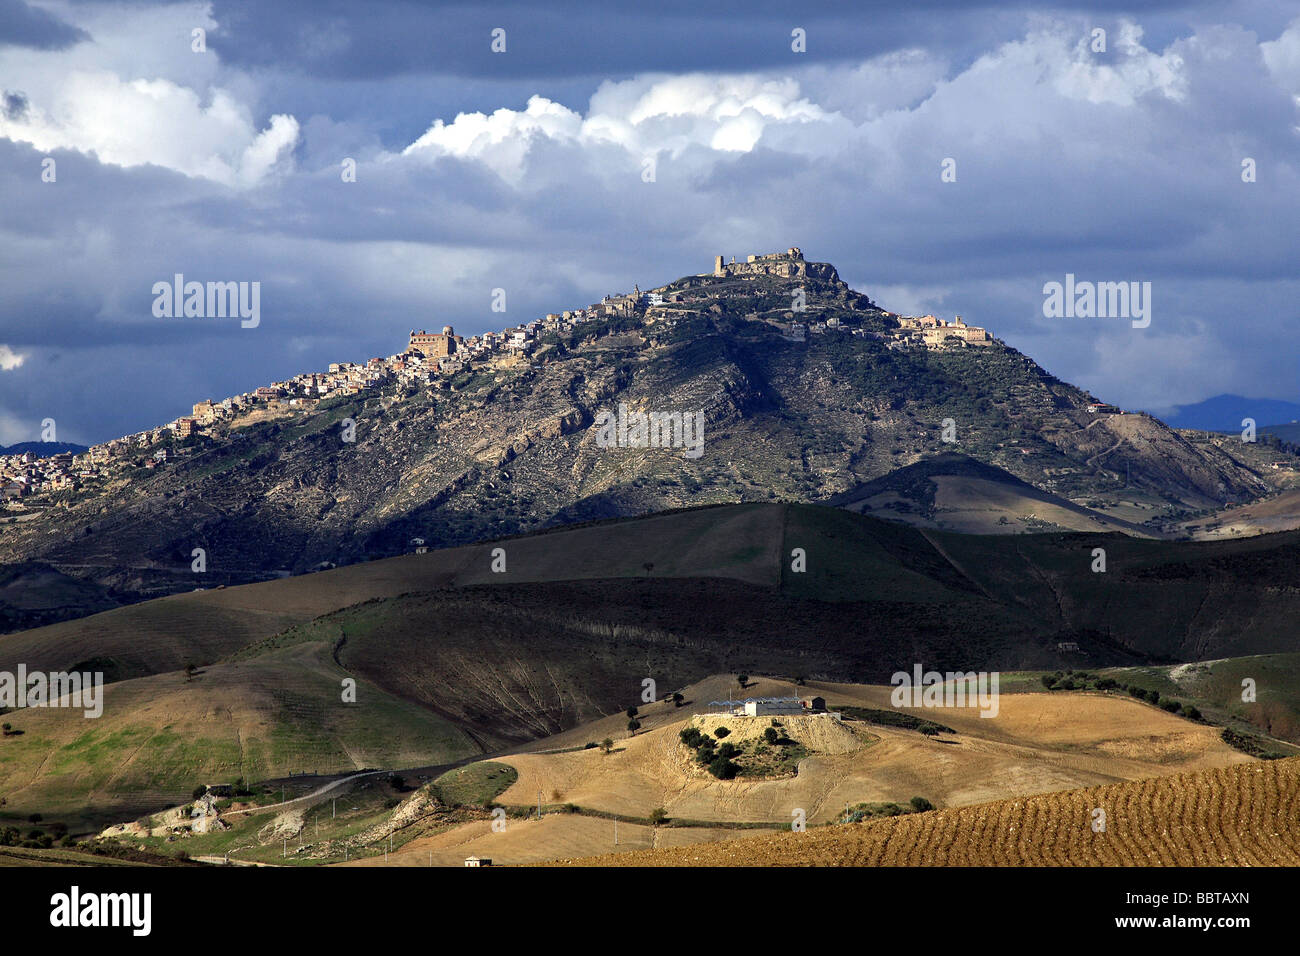 Village view, Agira, Sicily, Italy Stock Photo